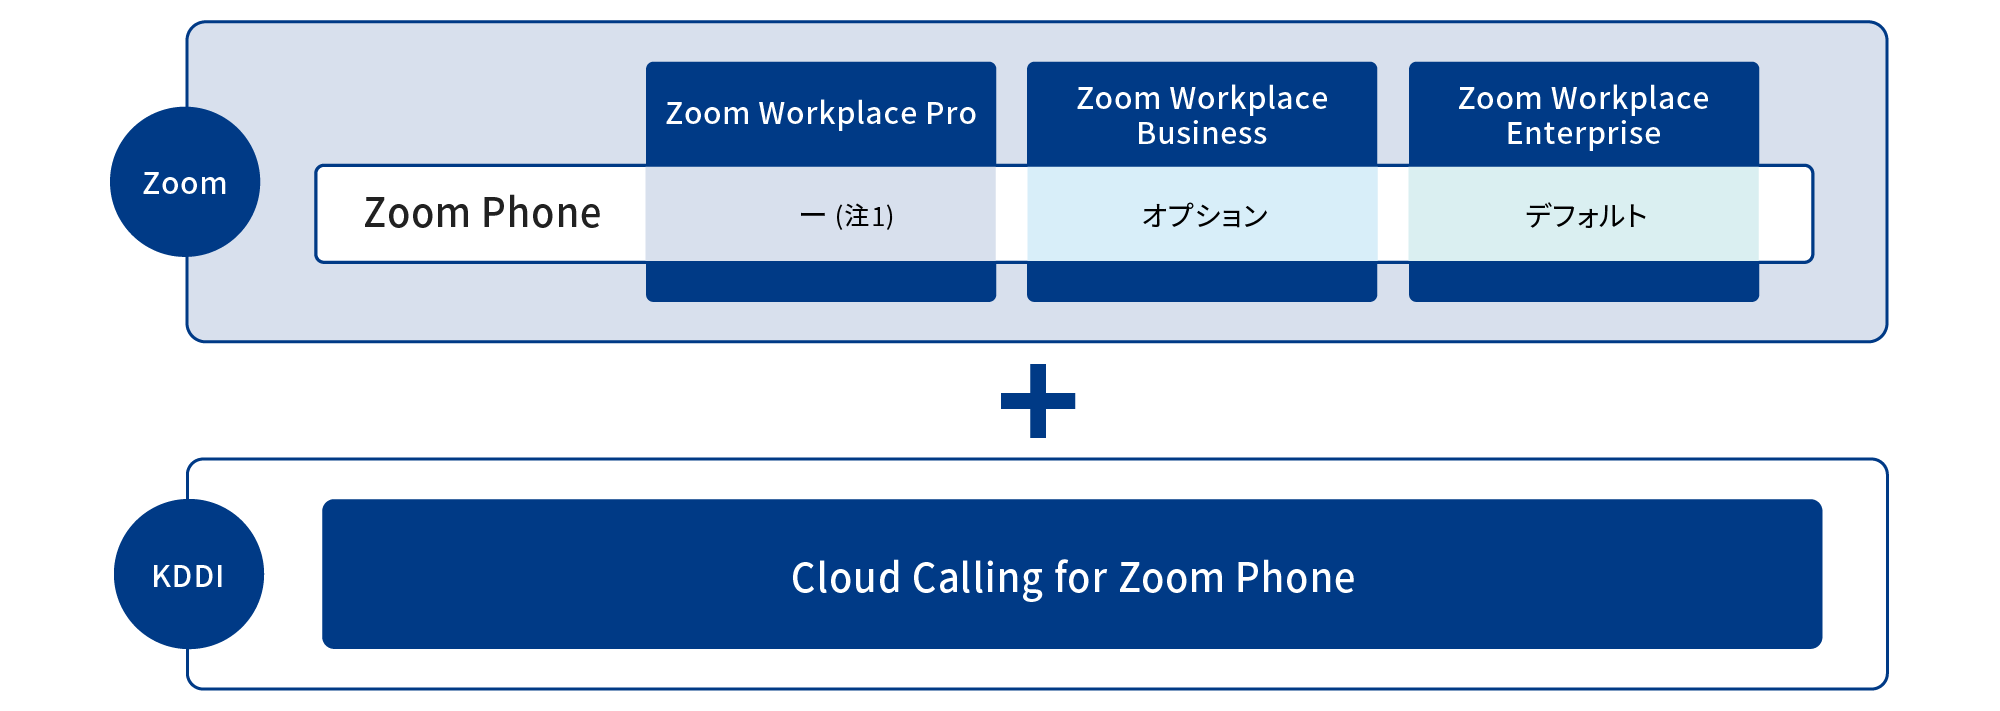 「Zoom」「Zoom Phone」オプションは、Zoom Workplace Businessではオプション、Zoom Workplace Enterpriseではデフォルトでご利用いただけます。 「Zoom Phone」 オプションを利用される場合は、 通話状況や通話品質の確認が可能なダッシュボード機能のある 「Zoom Workplace Business」 以上のライセンスでのご契約をお願いいたします。